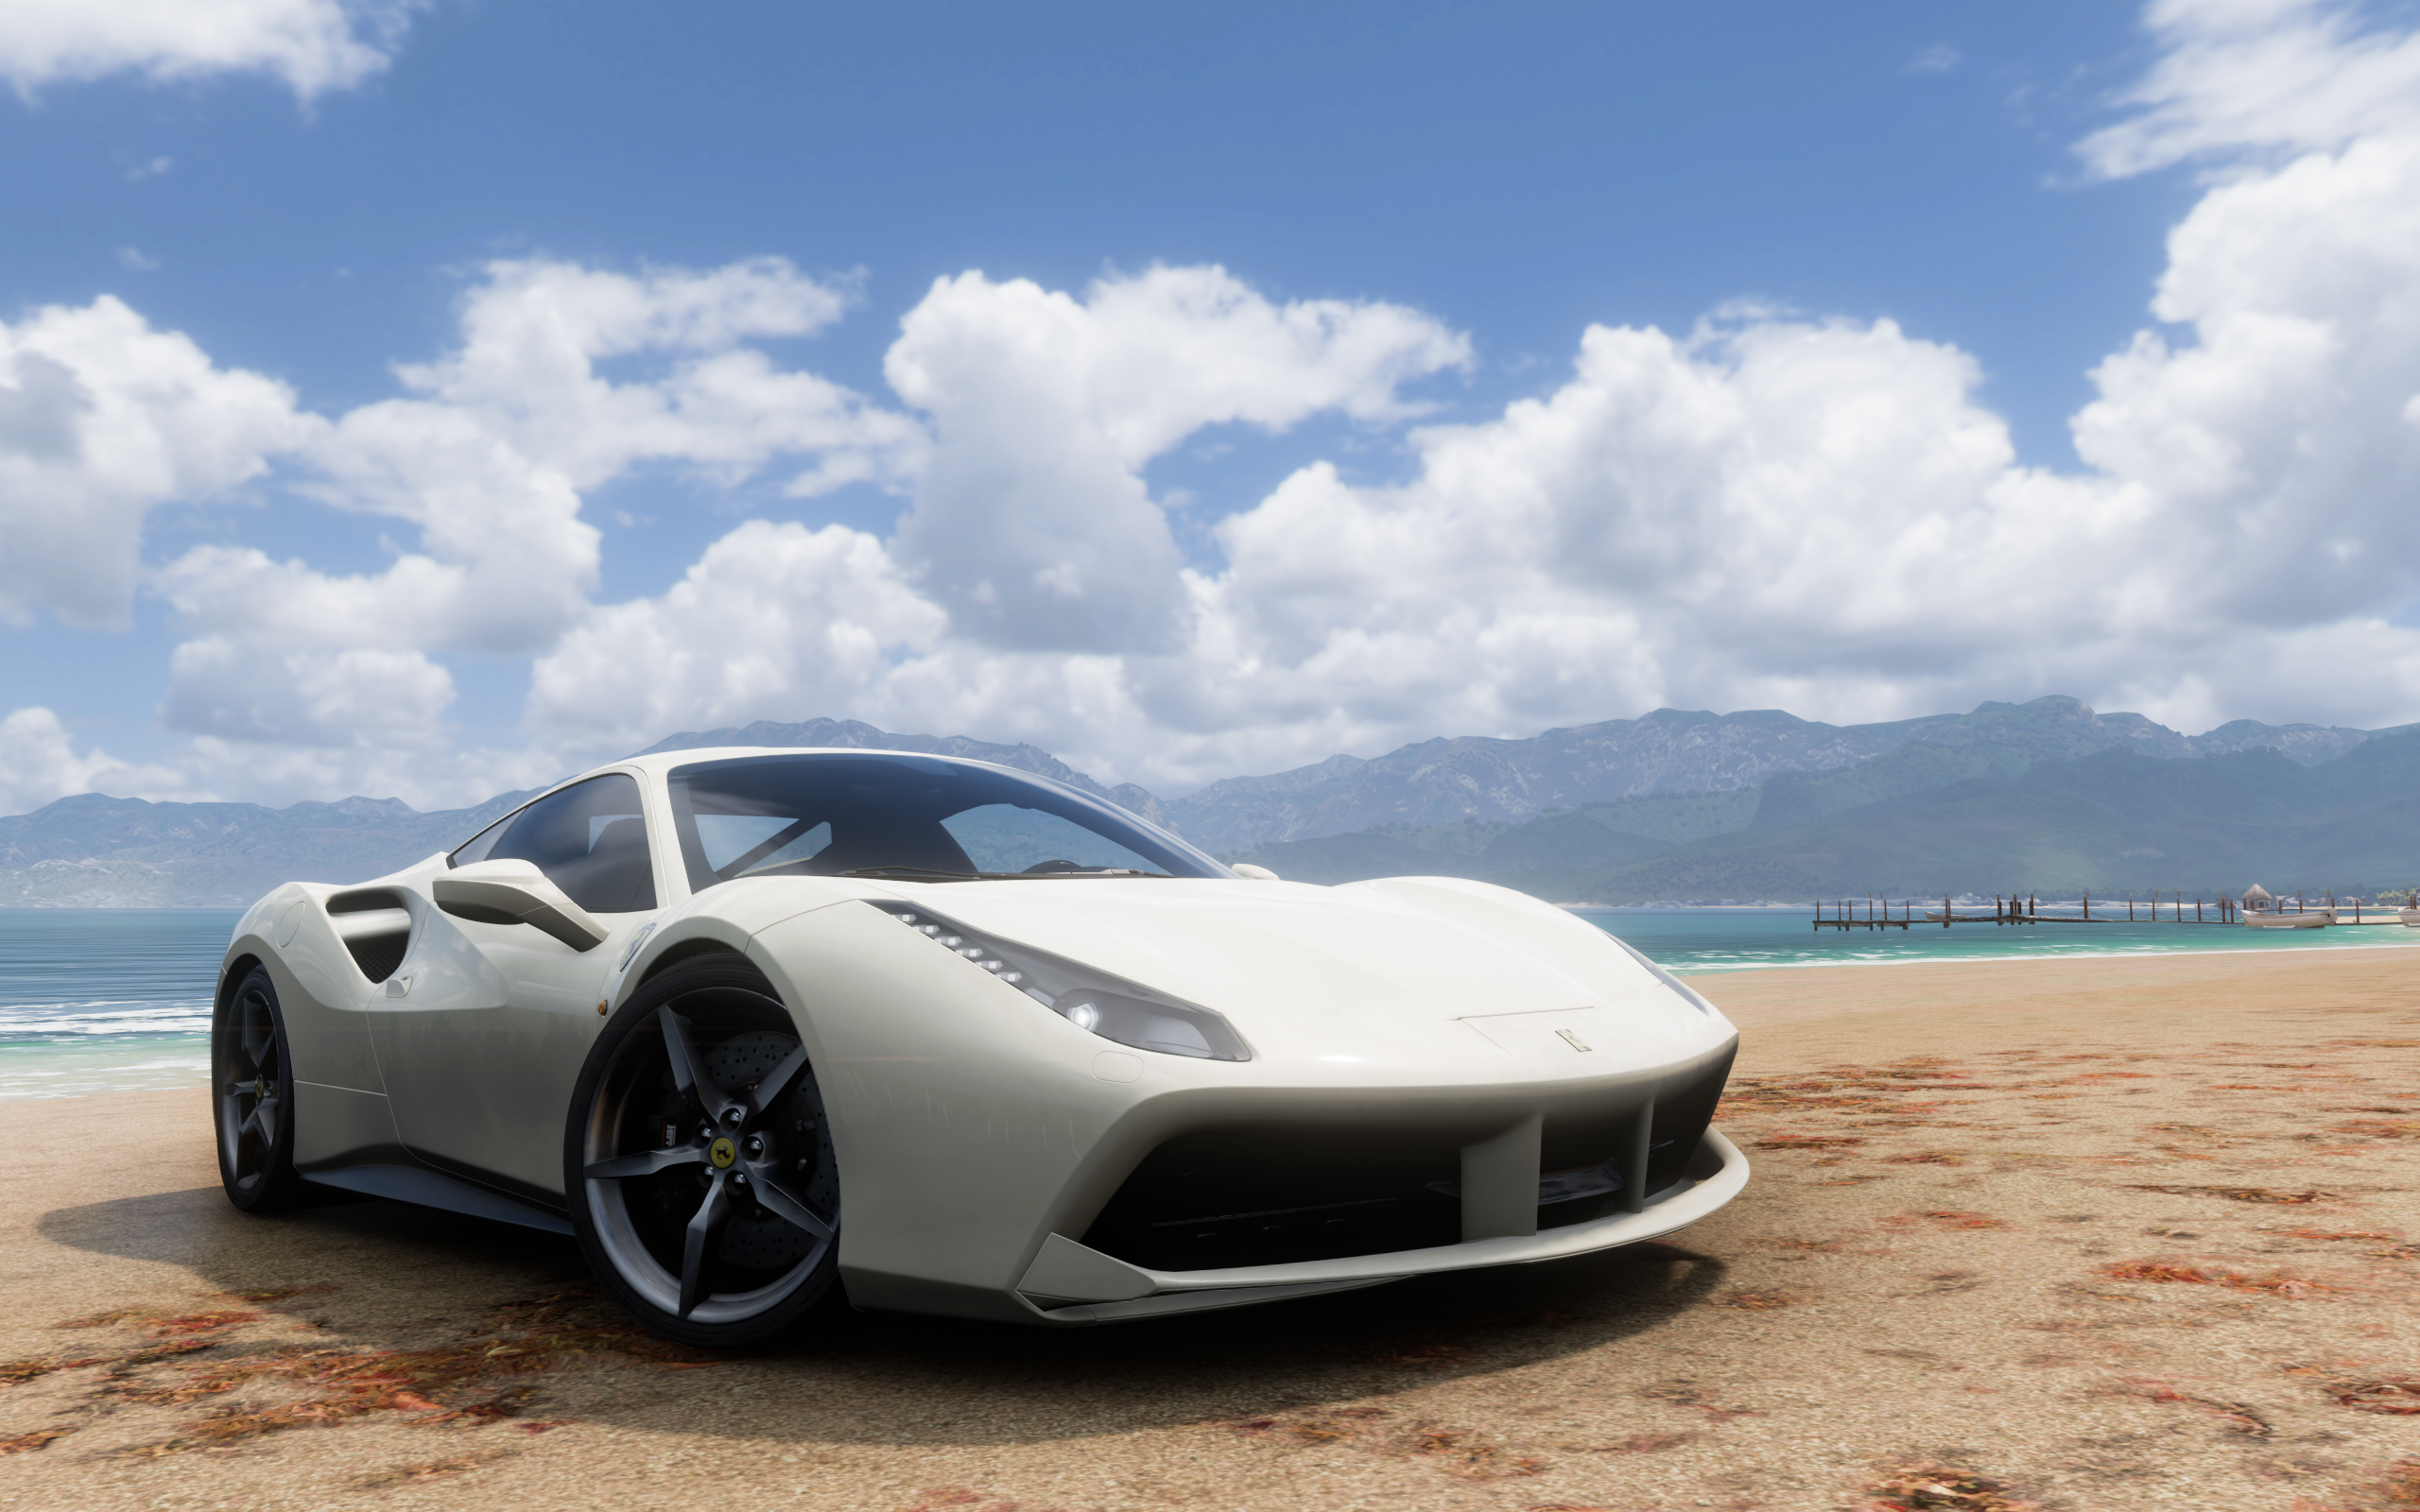 General 2560x1600 Forza Horizon 5 Ferrari screen shot video games CGI frontal view clouds beach sand water car